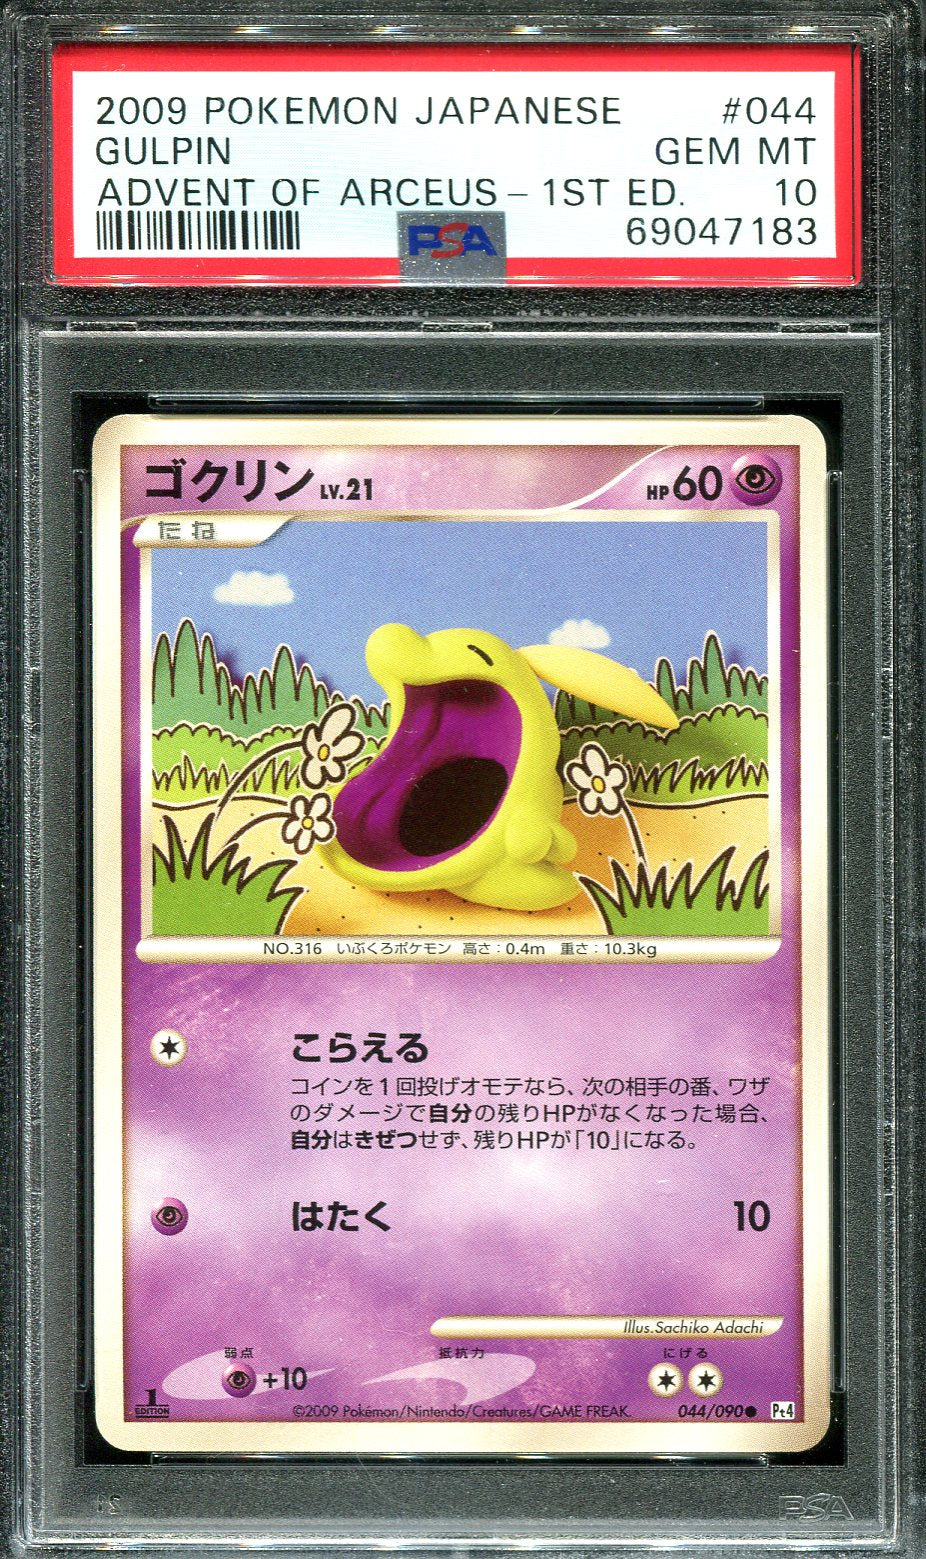 PSA 9 Gem Mint Pikachu 007/012 Shaymin LV.X Collect Pack 2009 Japanese